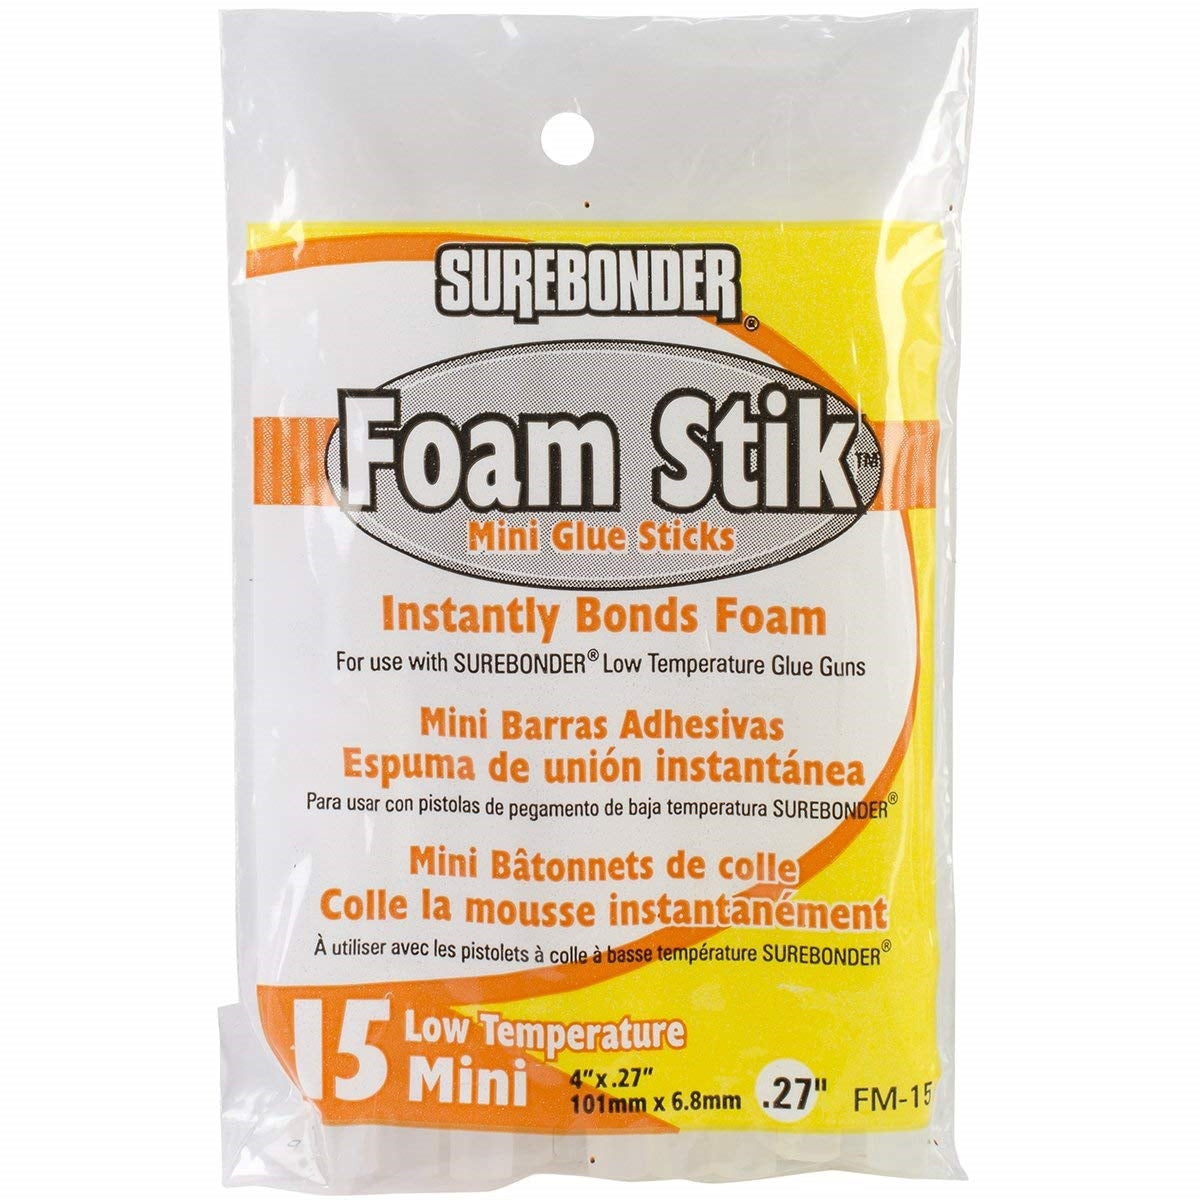 Foam Stik Mini Glue Sticks